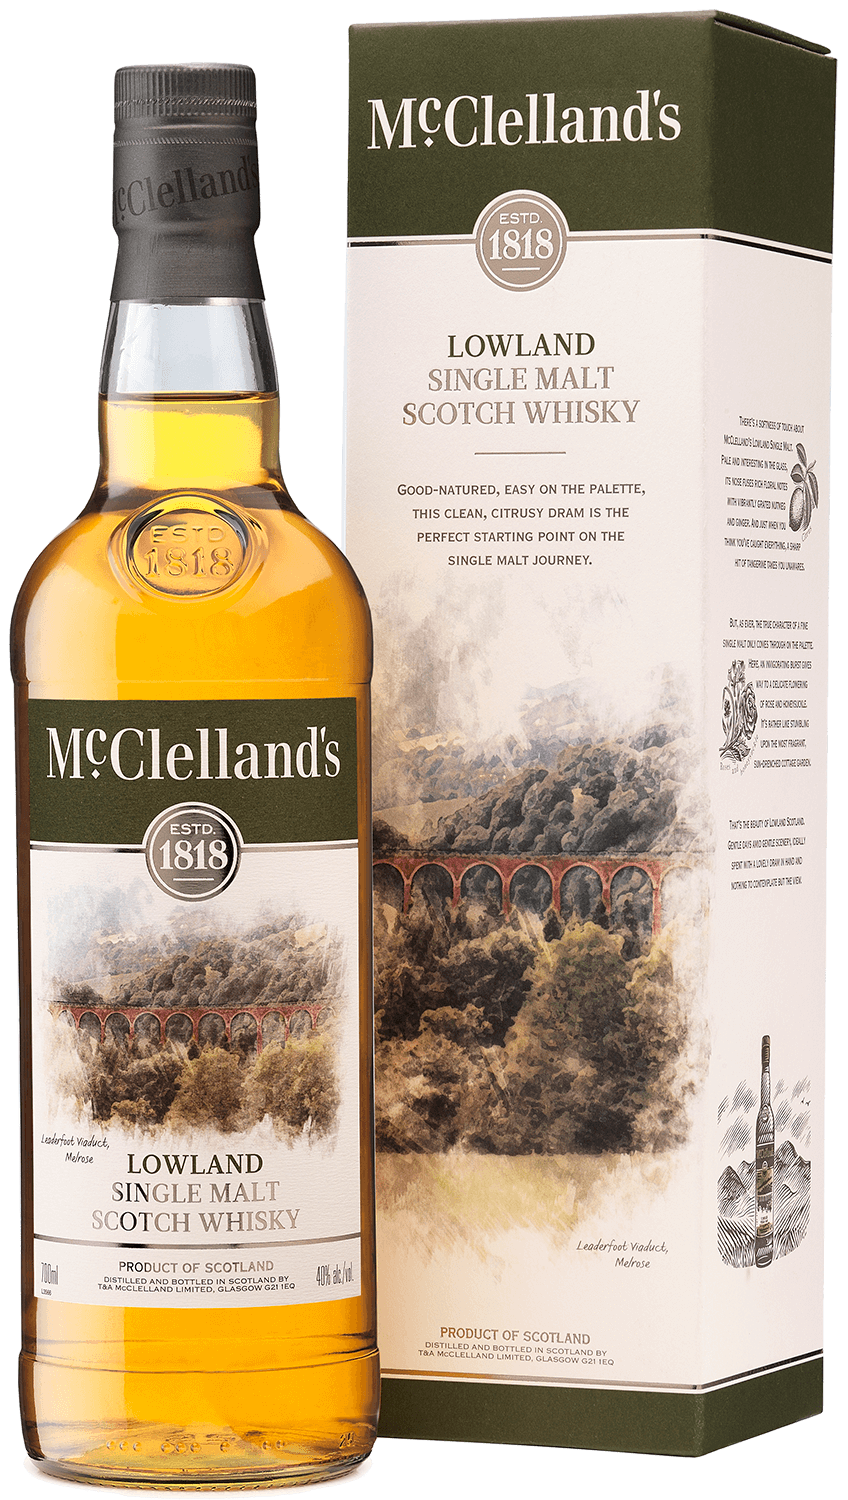 McClelland's Lowland single malt scotch whisky (gift box)